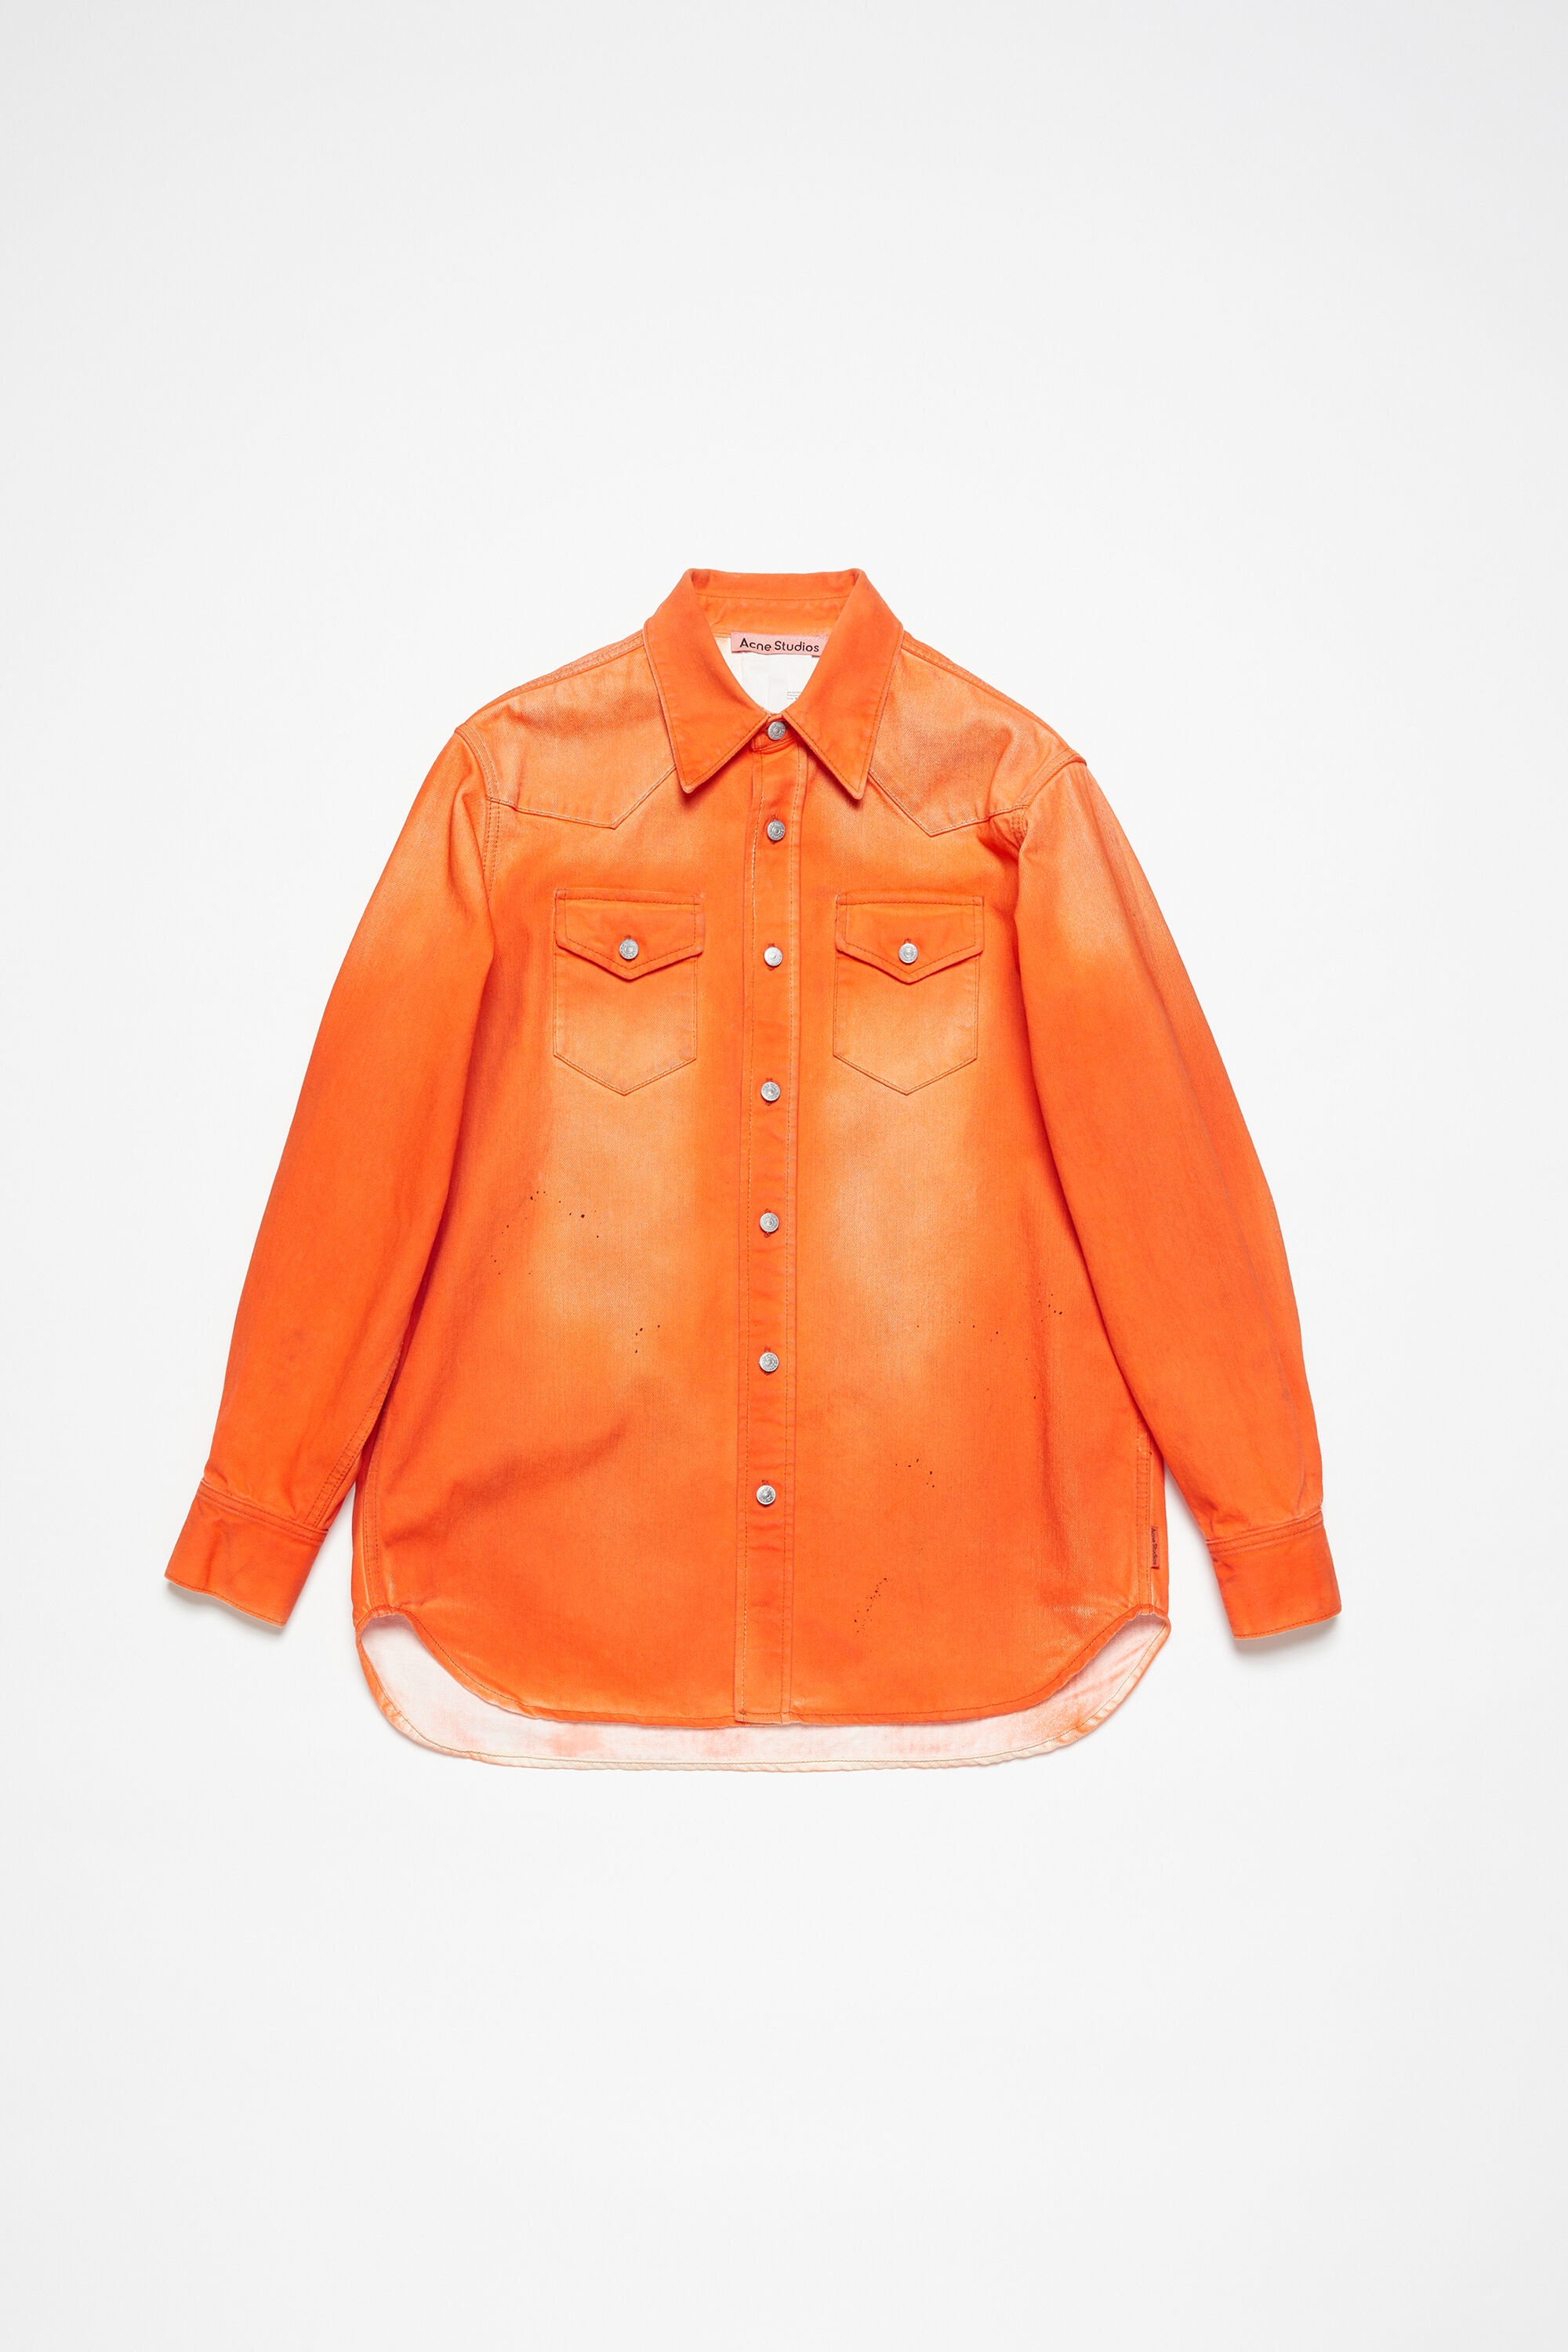 Denim shirt - Relaxed fit - Neon orange - 1